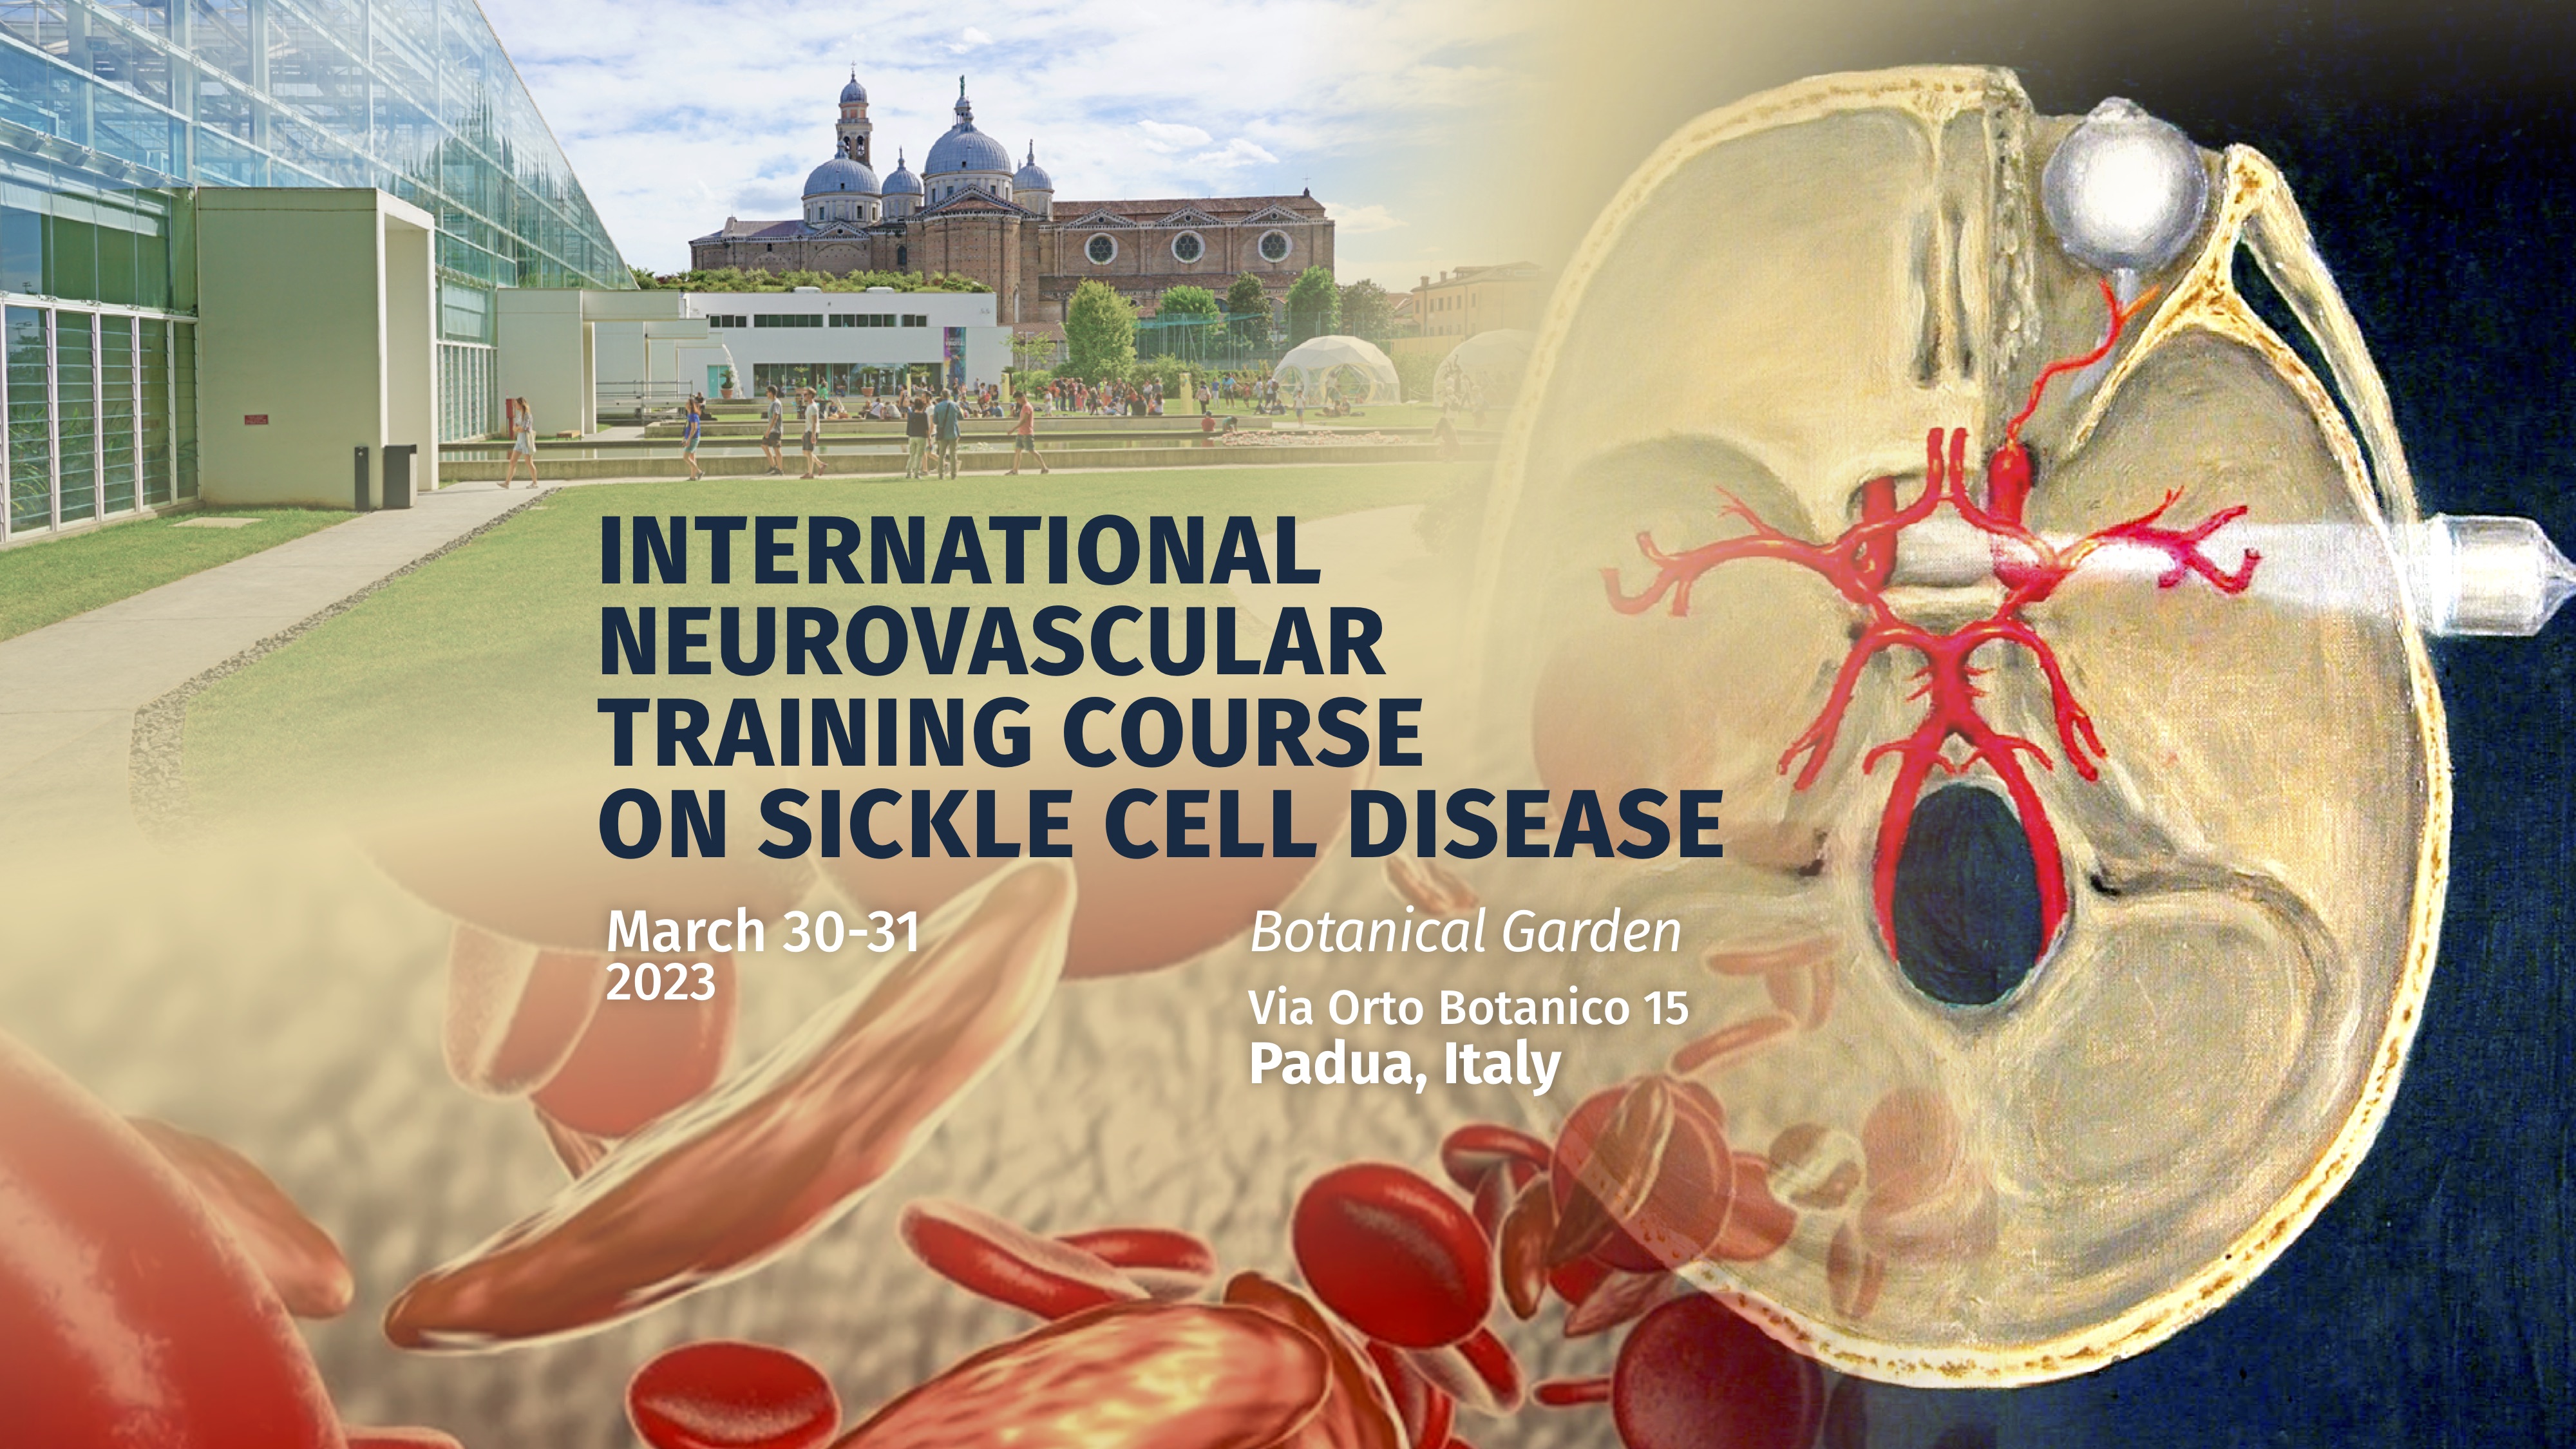 International neurovascular training course on sickle cell disease